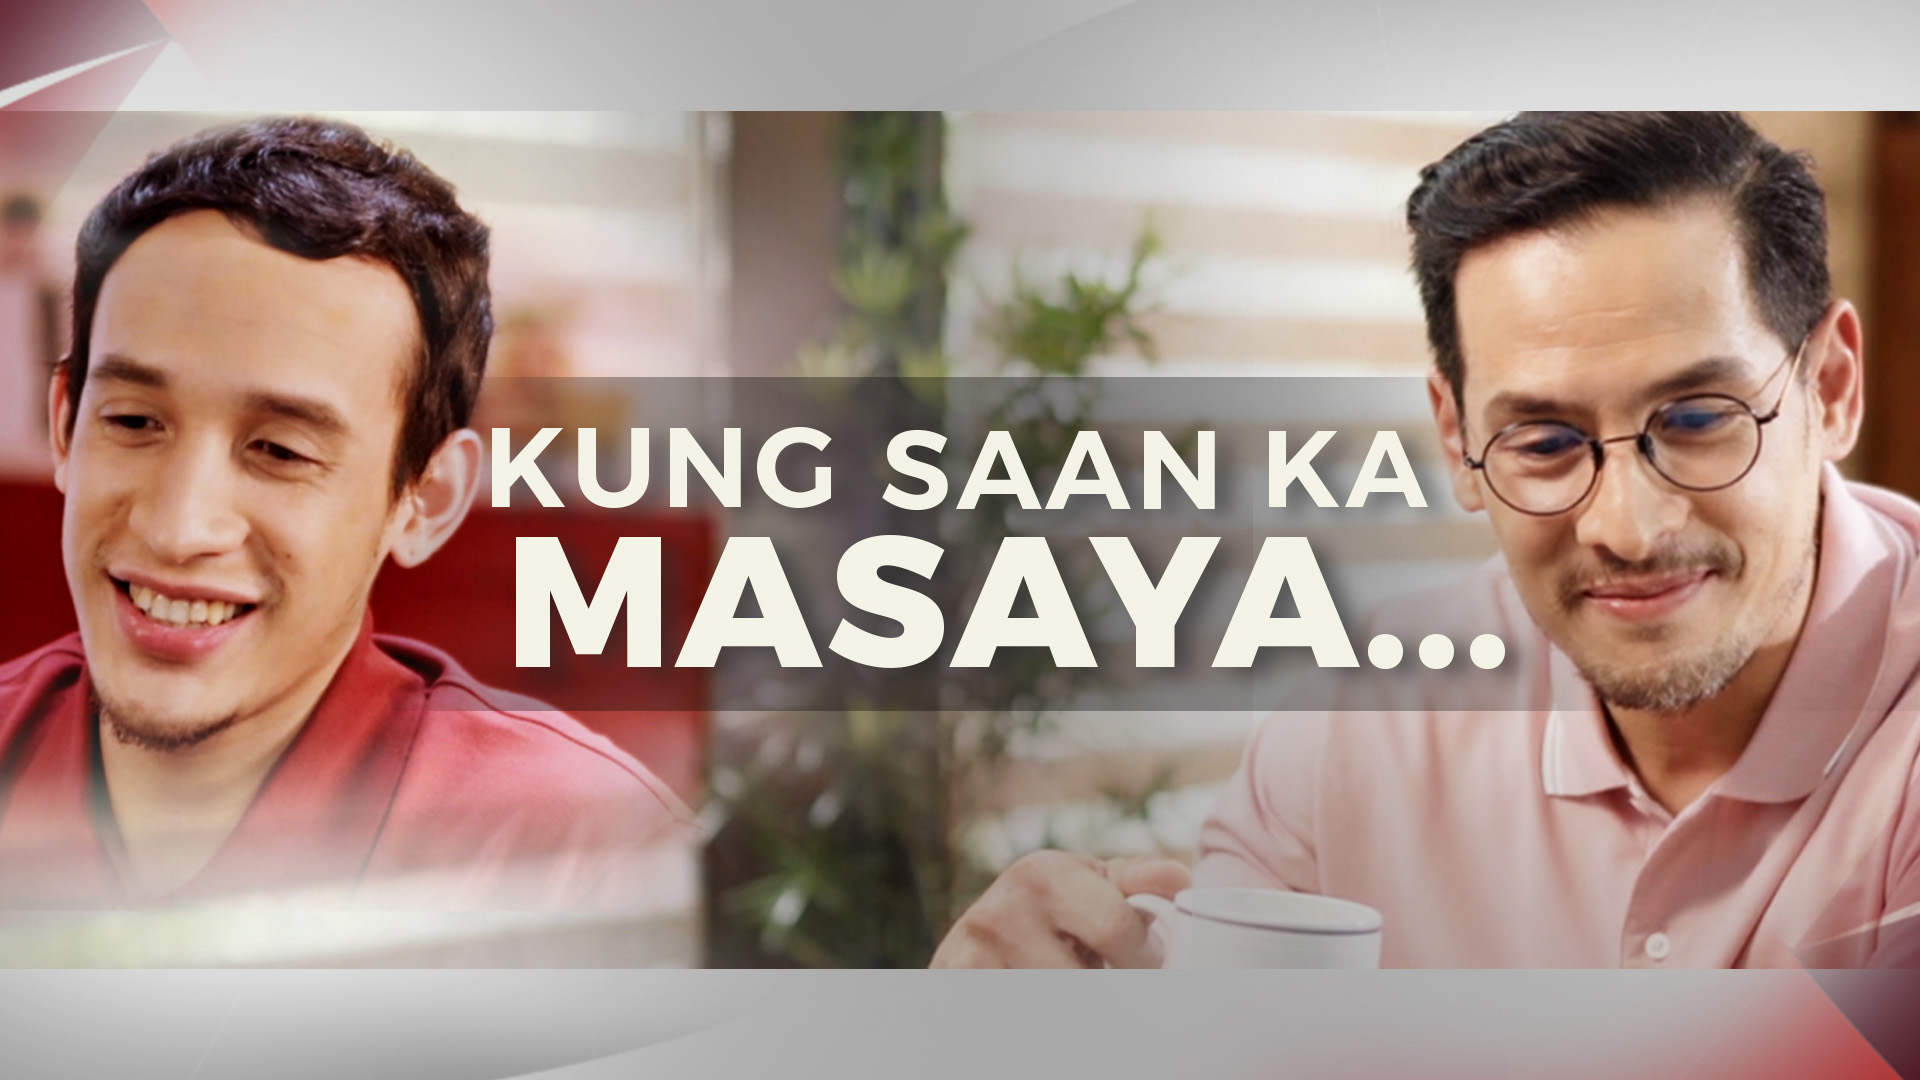 The iconic PLDT ad ‘Suportahan Ta Ka’ gets a real-life sequel